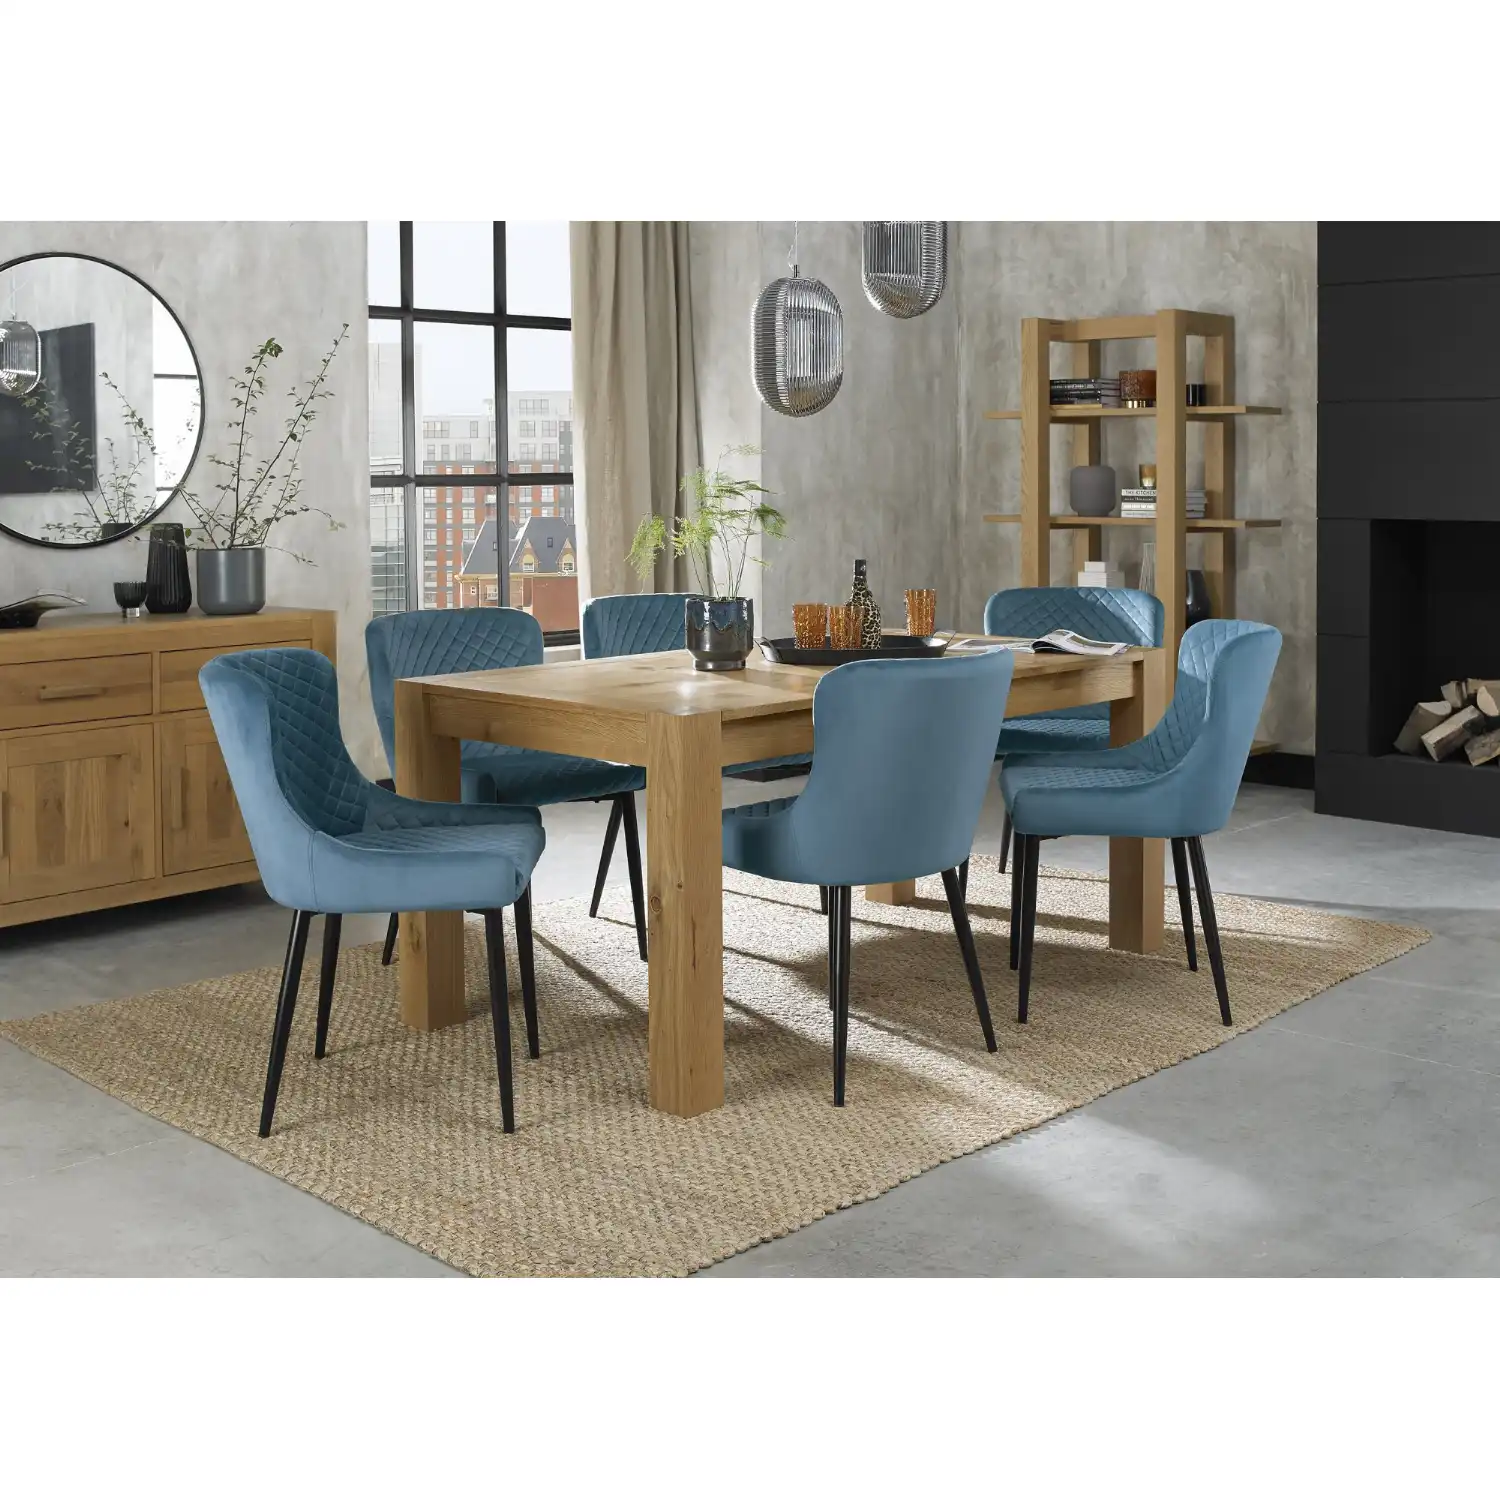 Light Oak 8 Seater Table And 6 Blue Velvet Chairs Dining Set